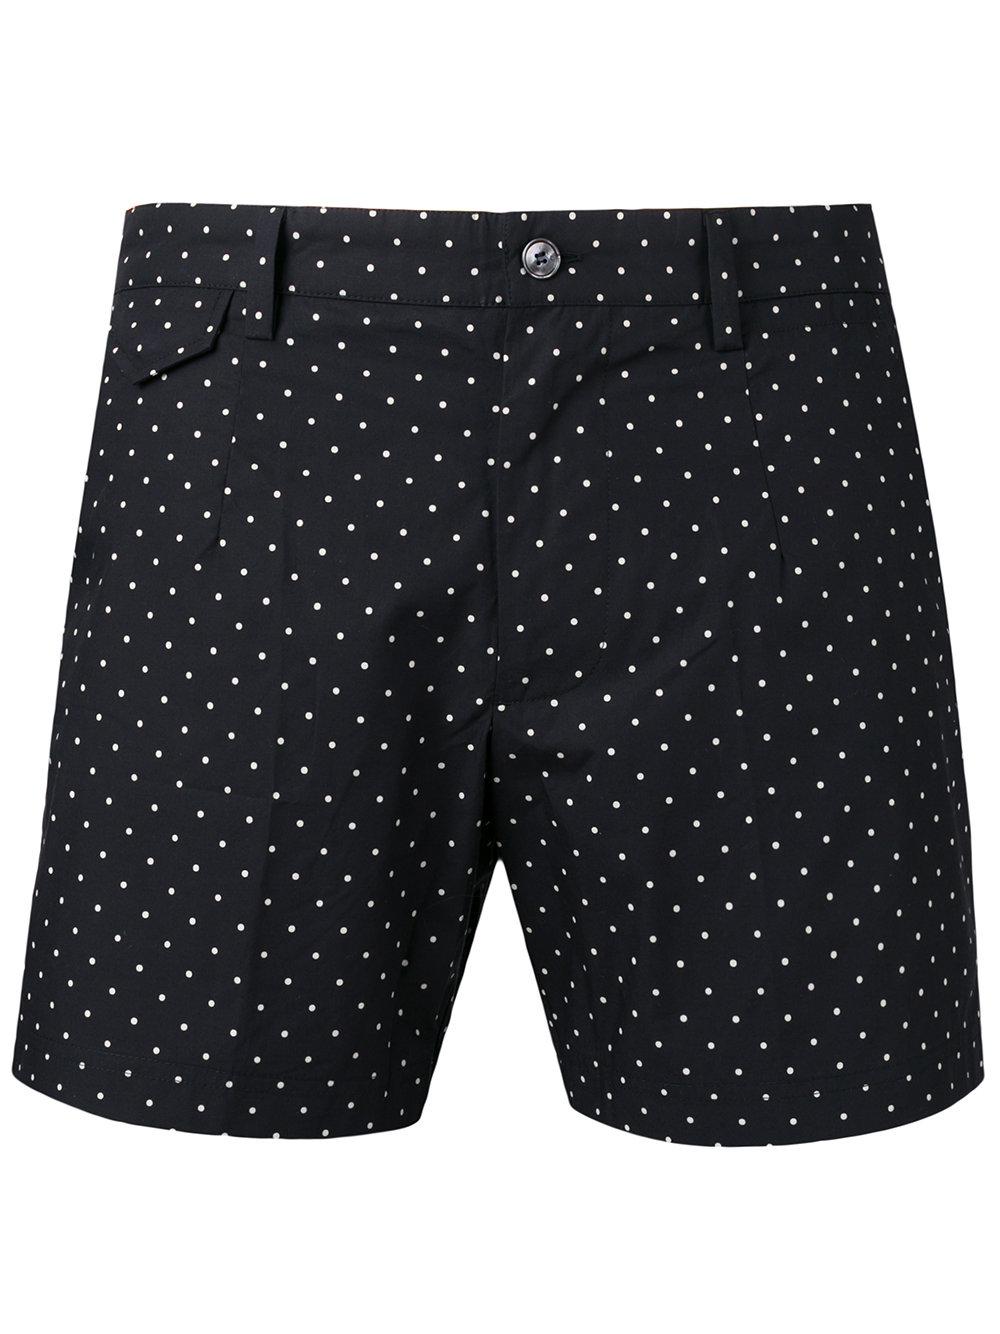 Lyst - Dolce & Gabbana Polka Dot Shorts in Black for Men